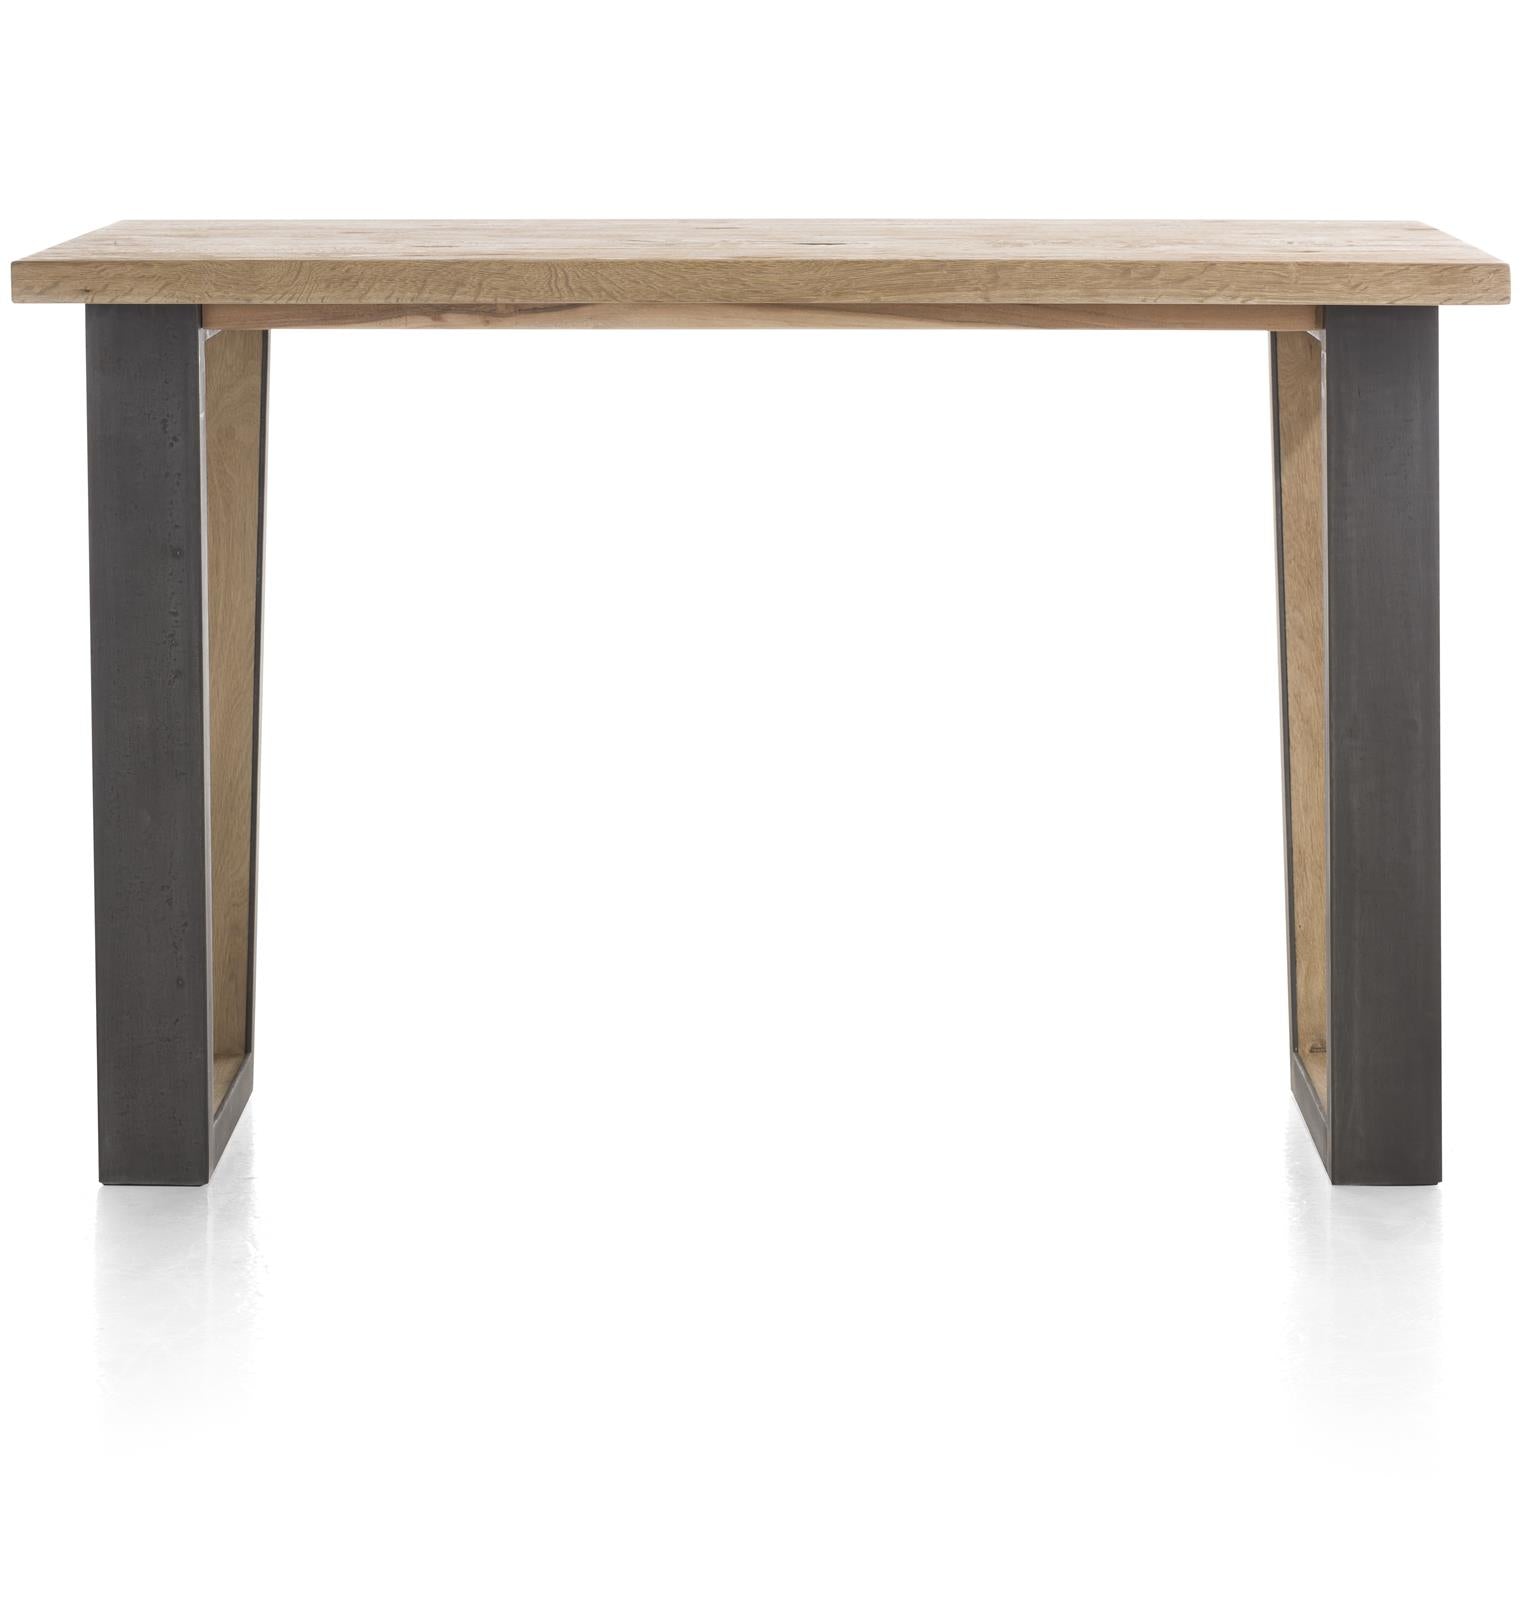 [Habufa_Cleveland]-Dining Tables-Habufa-160 cms-U shape metal legs wood insert-Wavy edge-Against The Grain Furniture